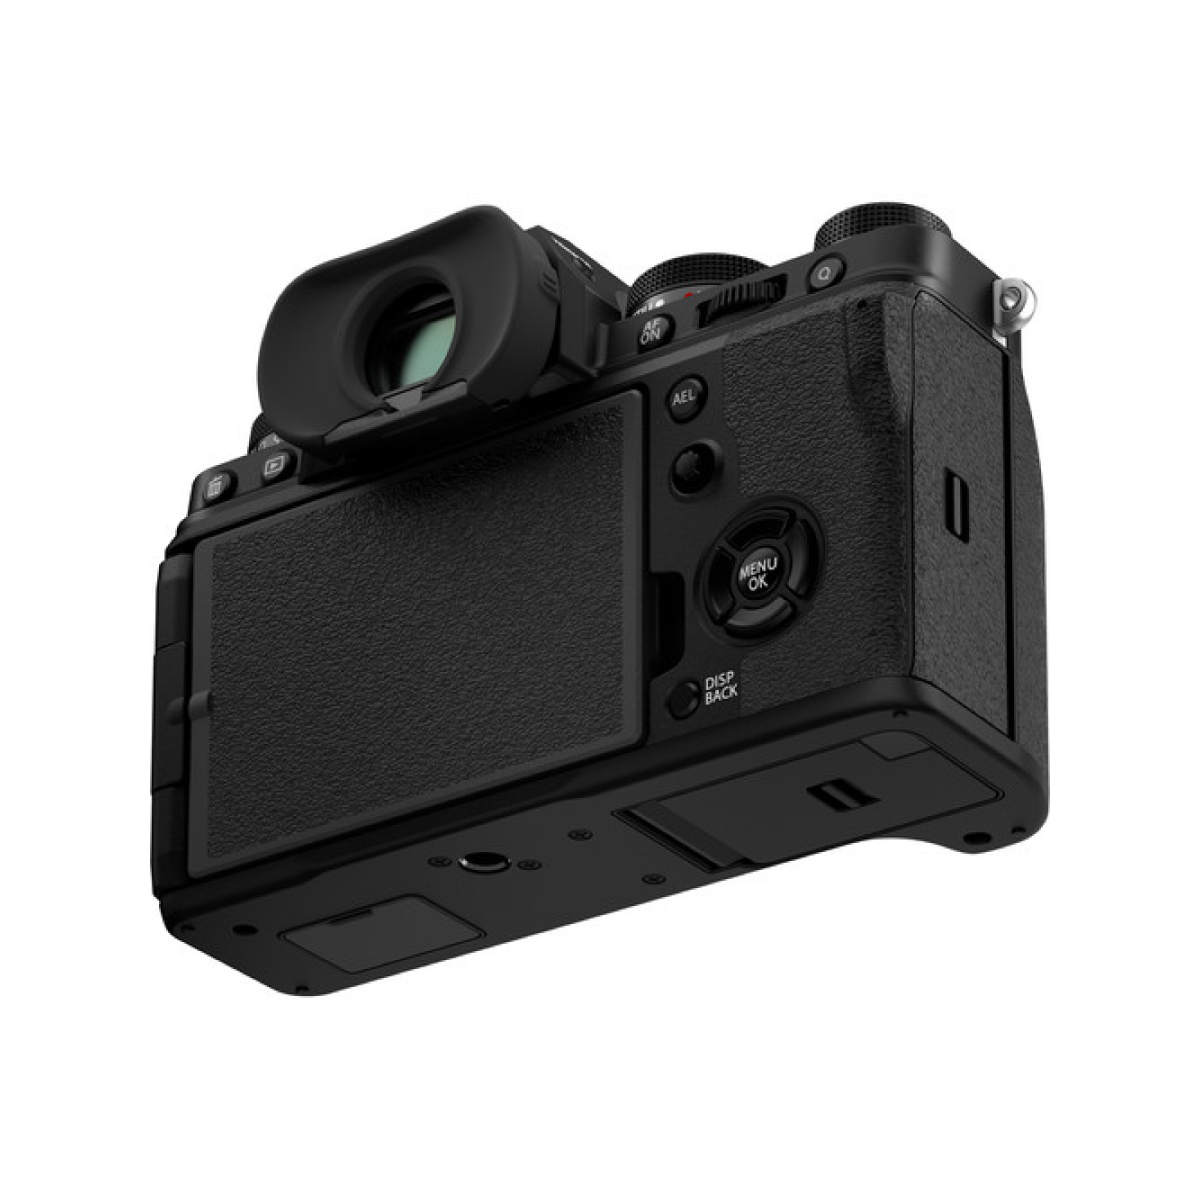 Fujifilm X-T4 26MP Mirrorless Camera Body with XF18-55mm Lens – Black (7)